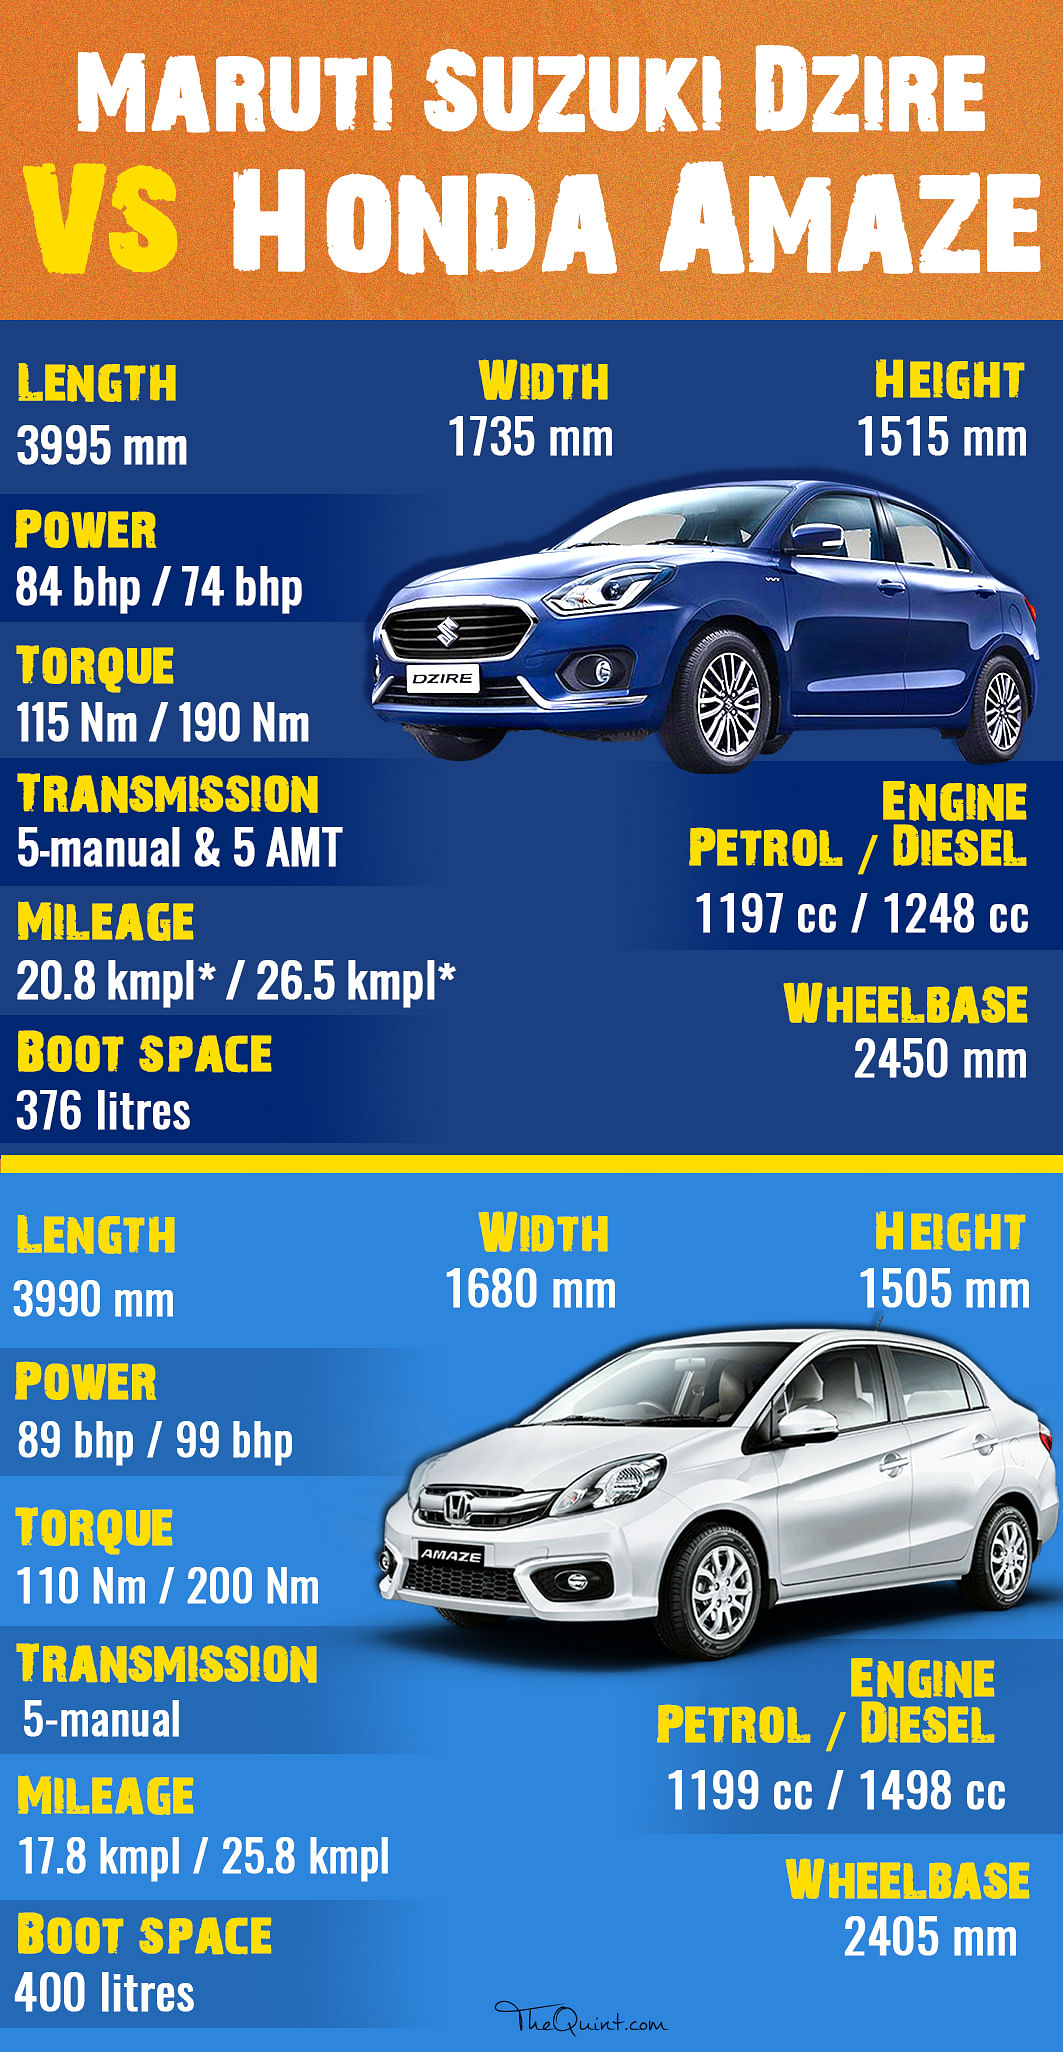 The 2017 Maruti Dzire compared to Tata Tigor, Honda Amaze, Ford Aspire, Volkswagen Ameo and Hyundai Xcent.